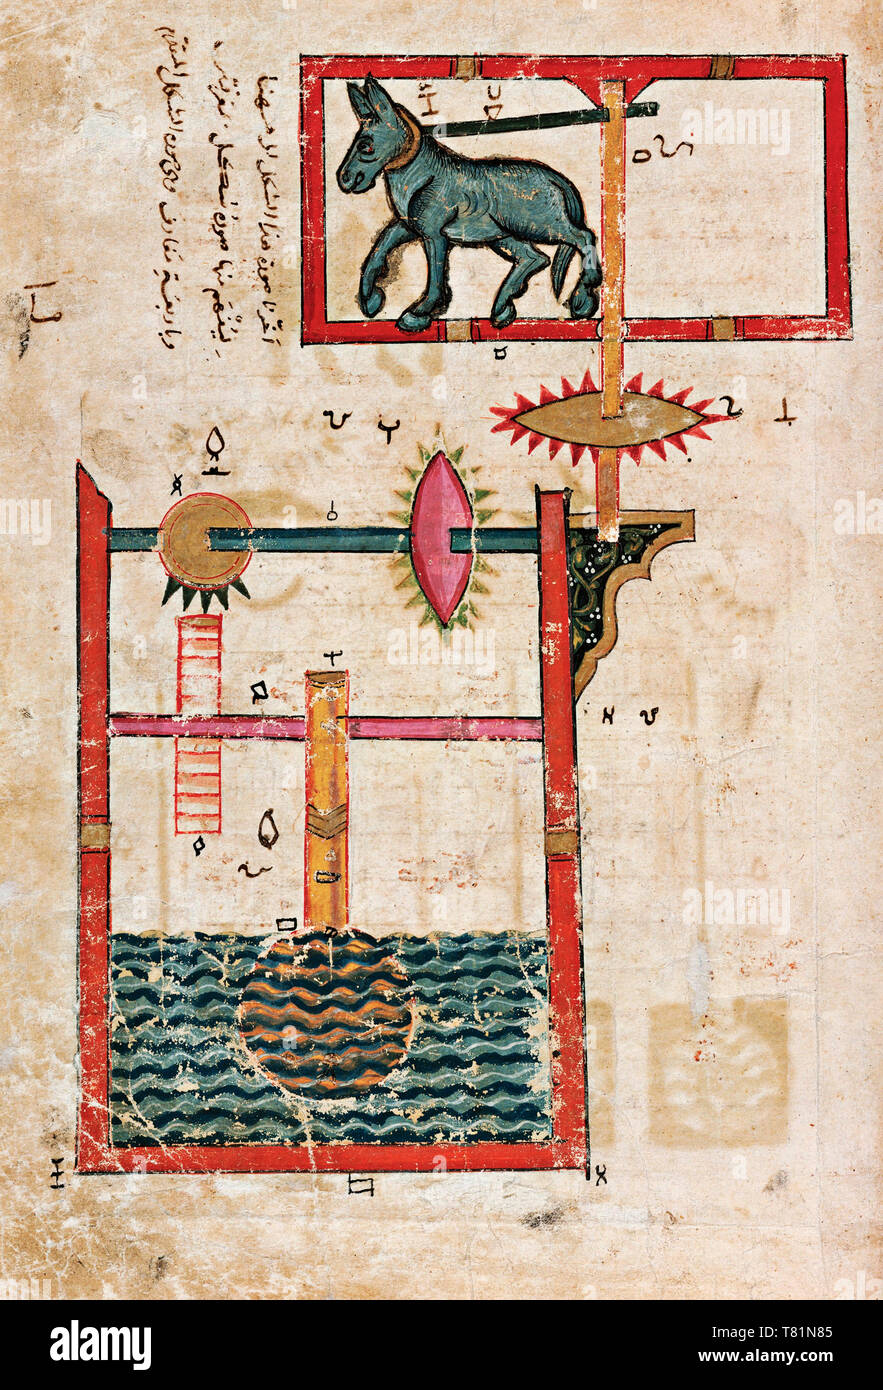 Waterwheel invention, 12th century Stock Photo